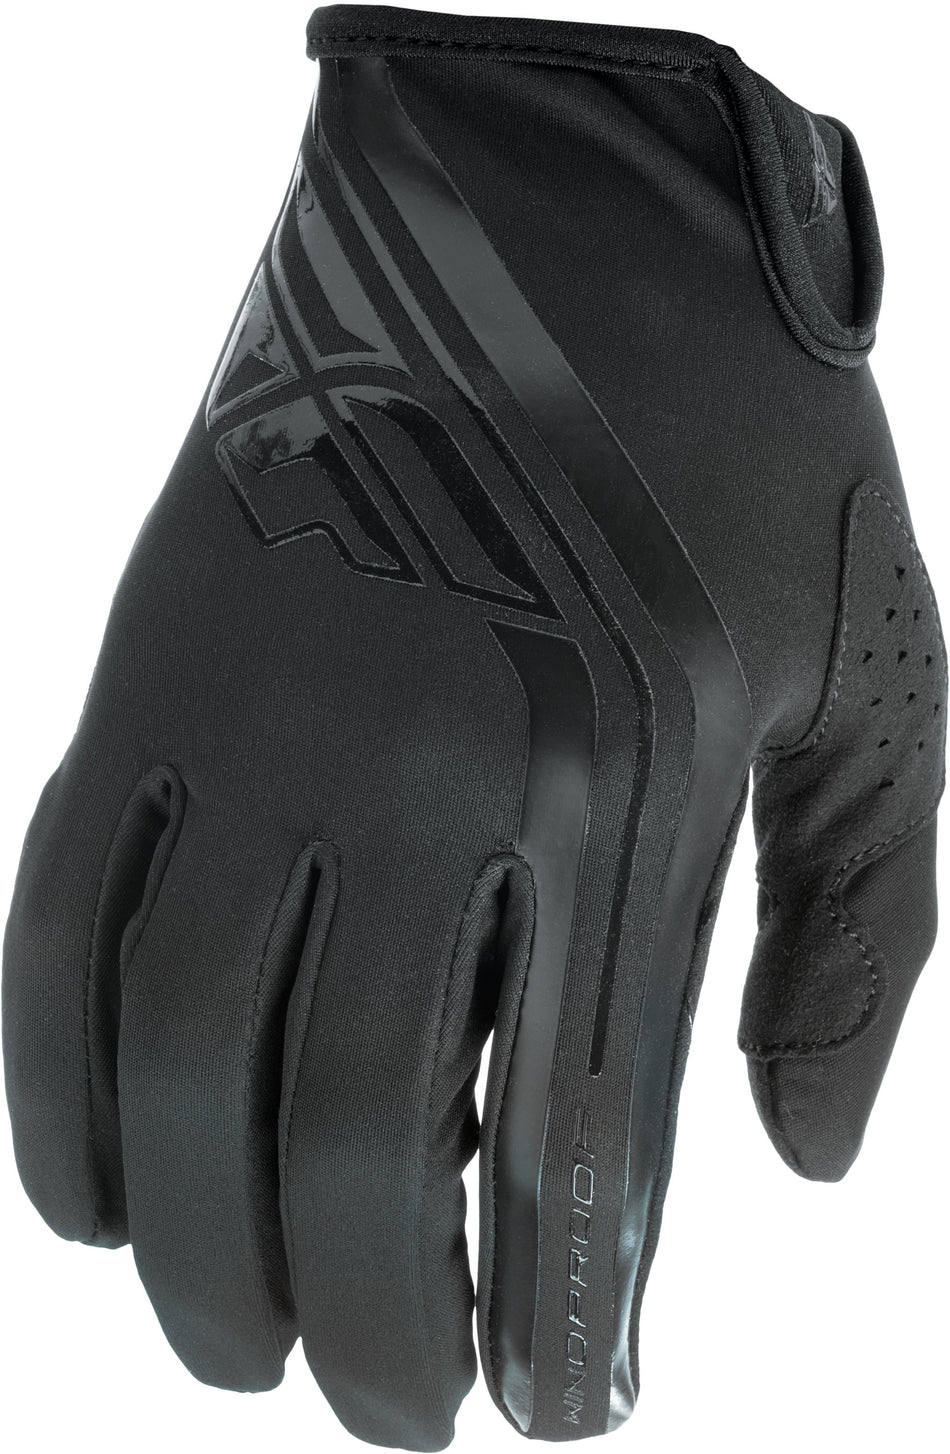 FLY RACING Windproof Gloves Black Sz 11 371-14011